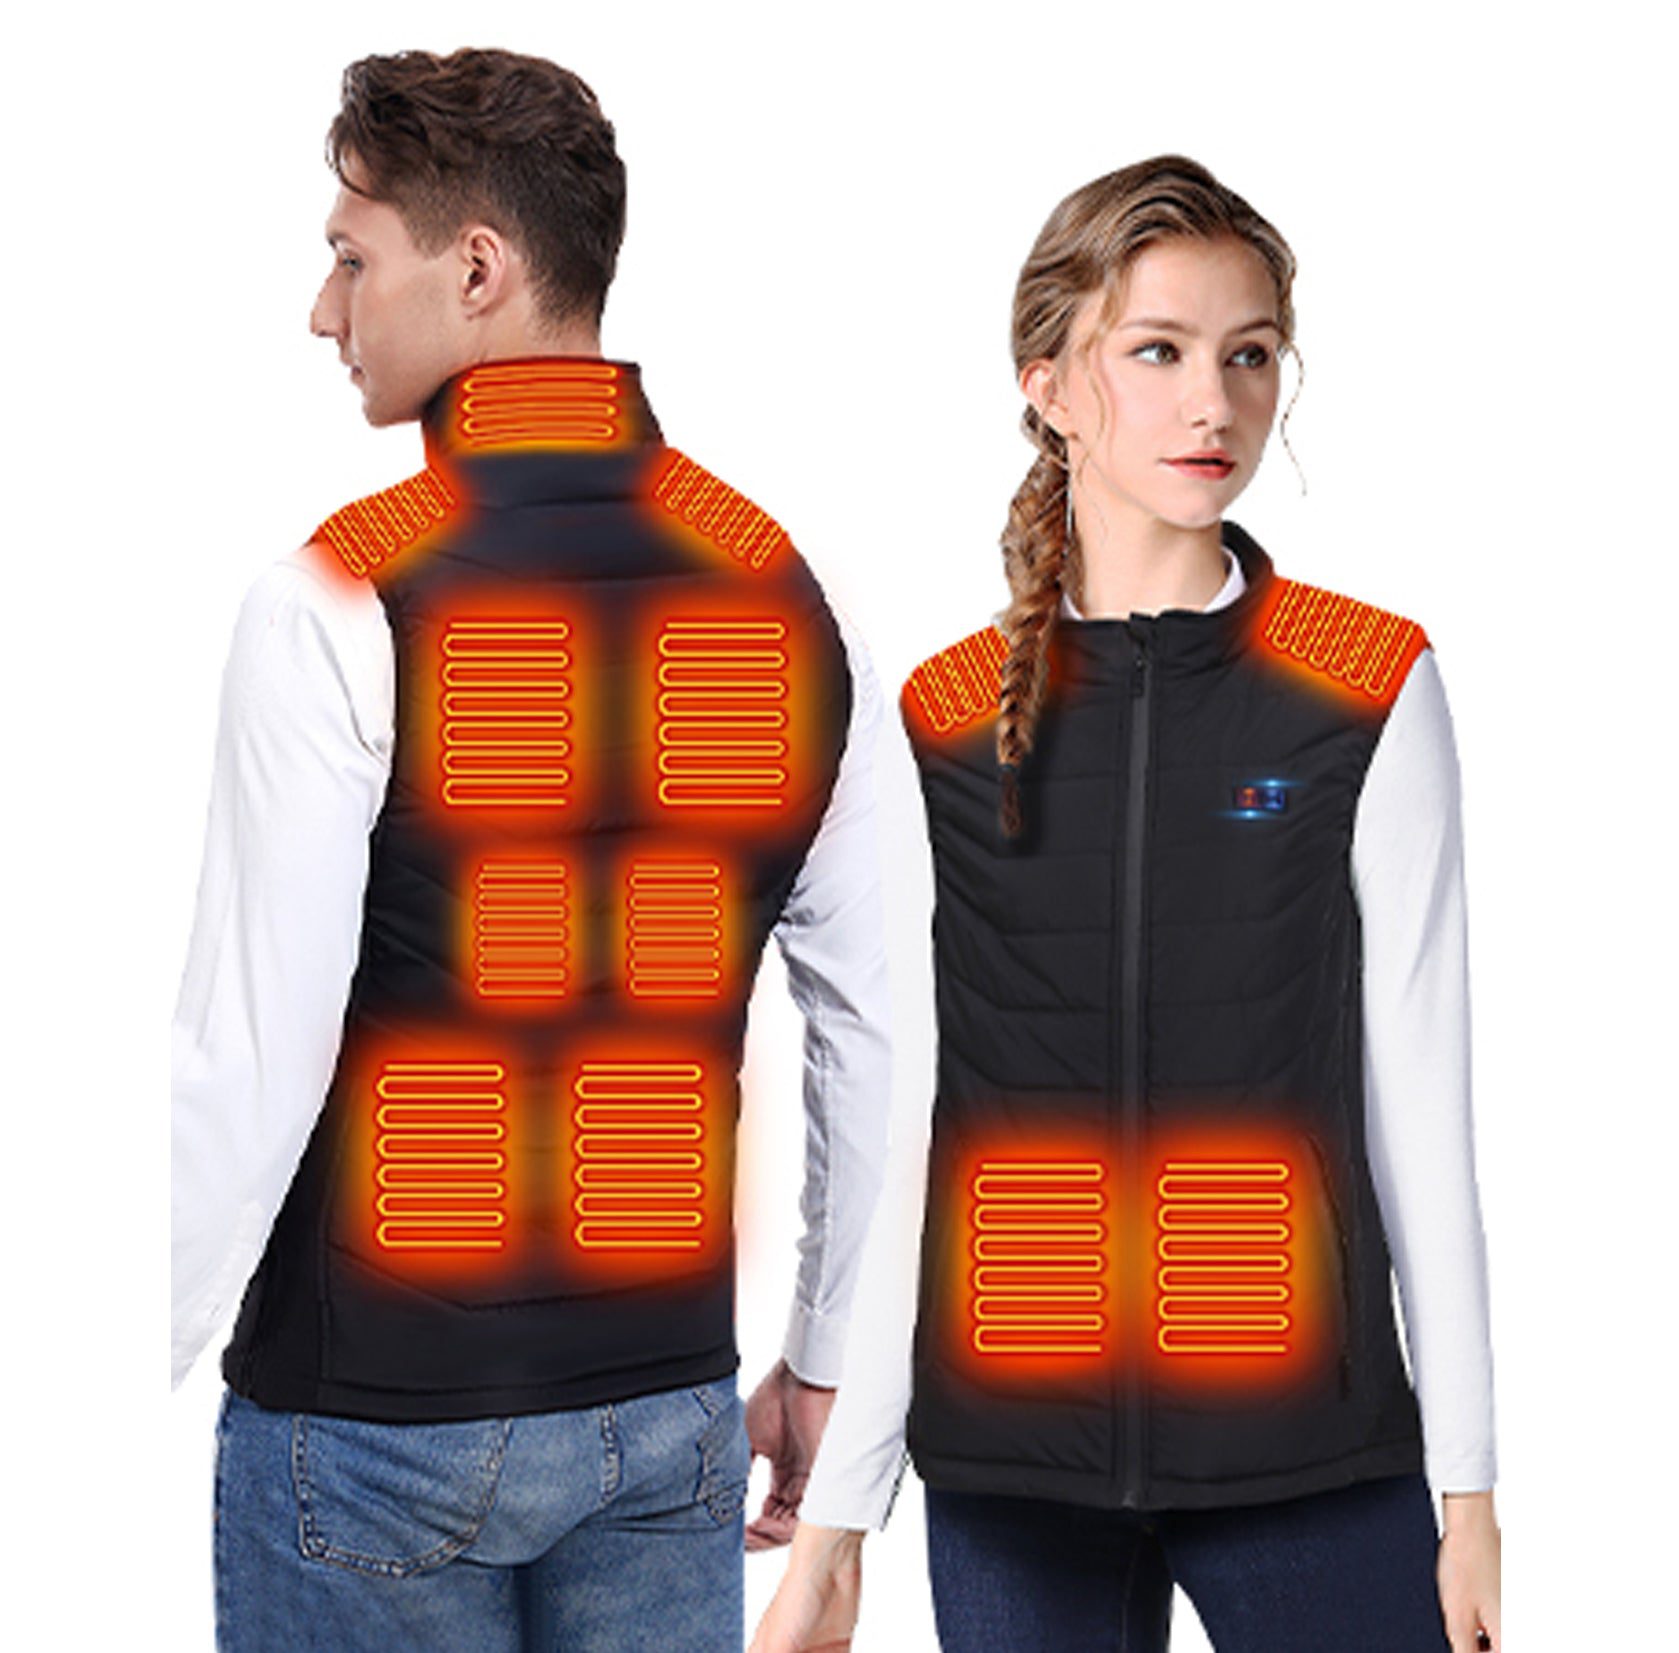 Electric Winter 11 Heating Zones Rechargeable USB Heated Vest for Men Women